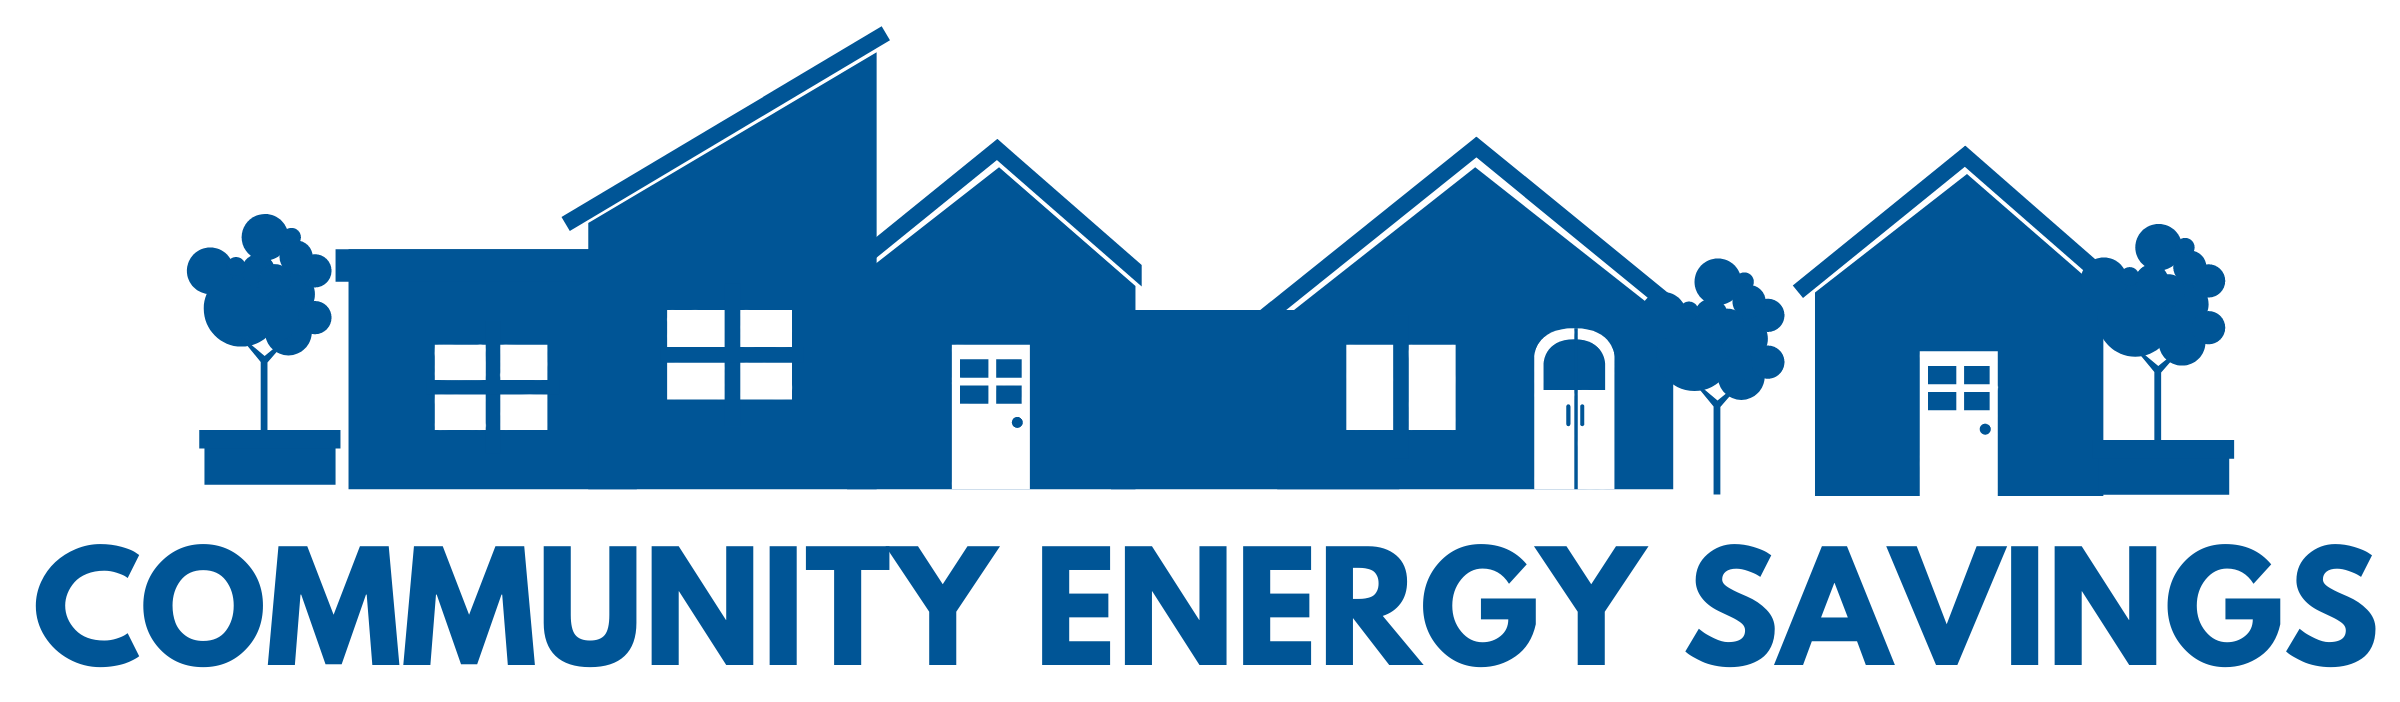 AMP Community Energy Savings logo